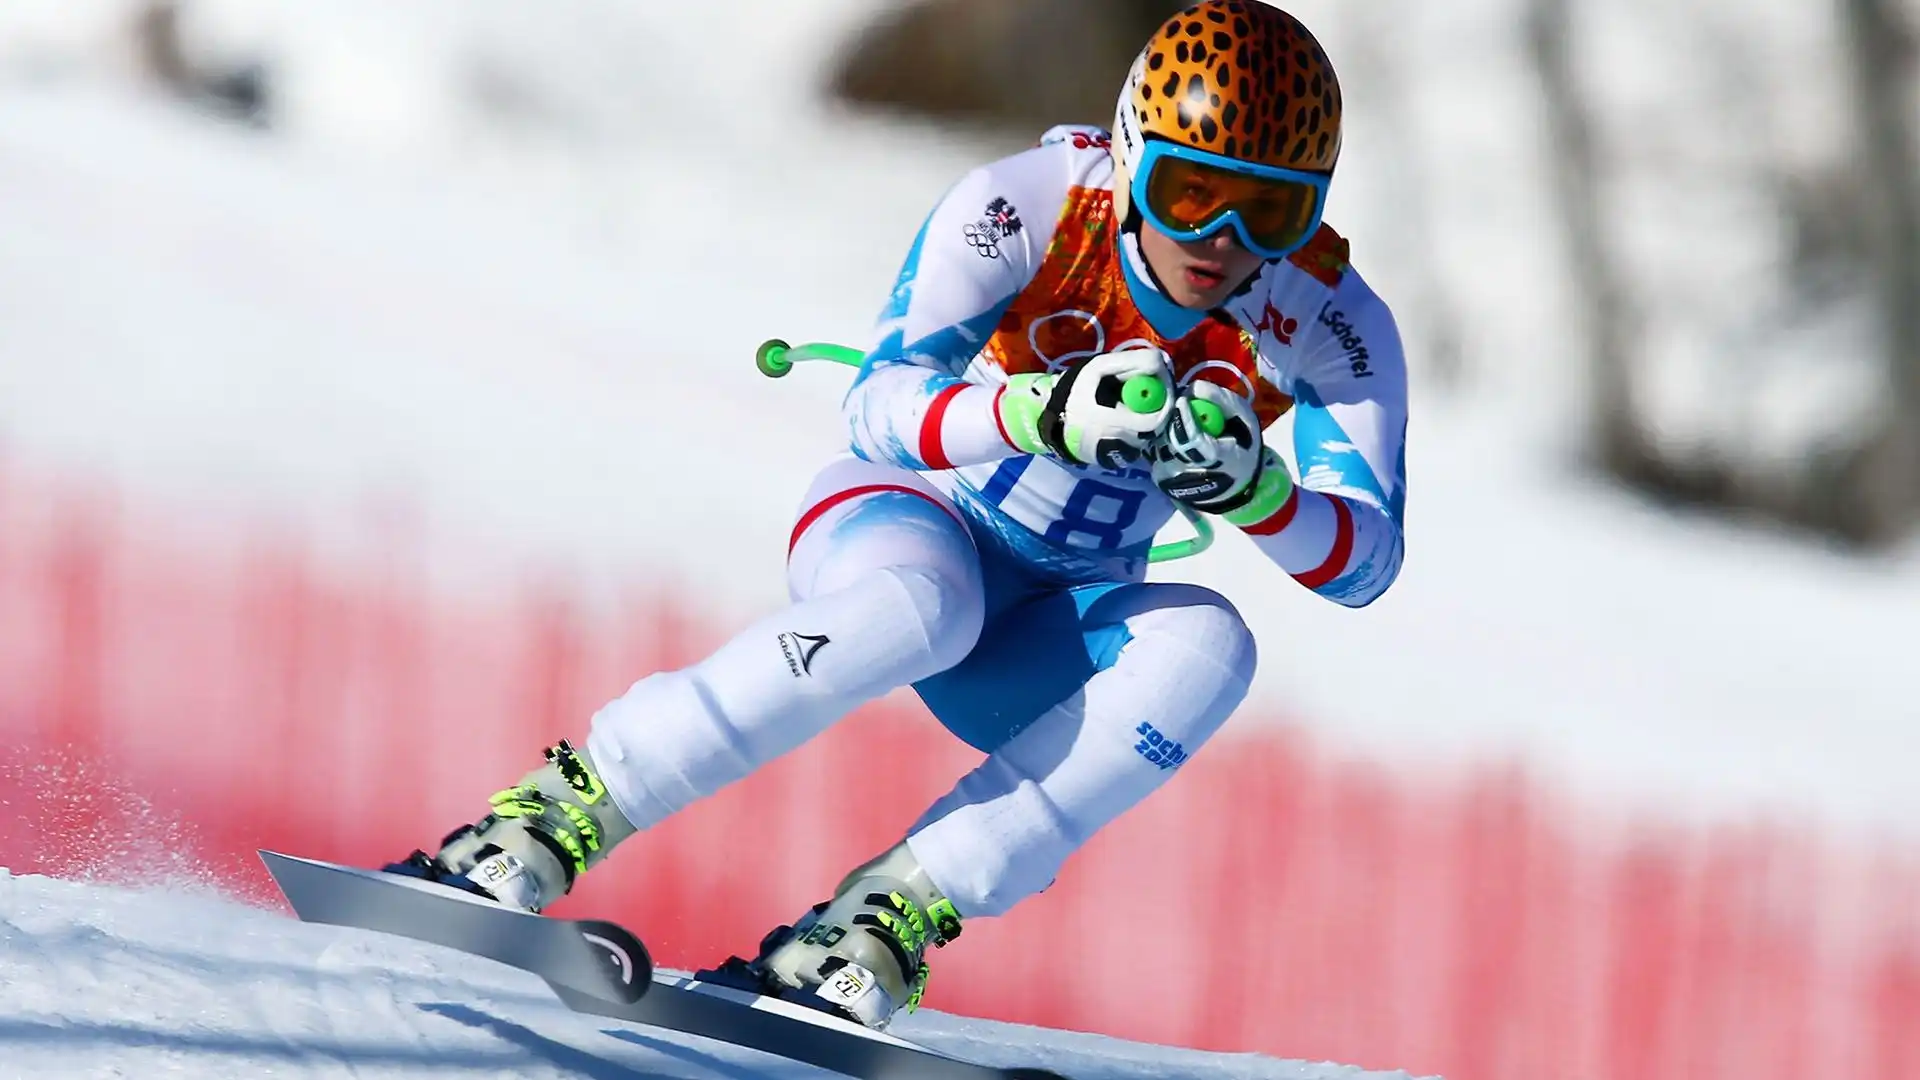 Ai giochi olimpici ha vinto 3 medaglie:1 oro (supergigante a Soci 2014) e2 argenti (slalom gigante a Soci 2014, supergigante a Pyeongchang 2018)